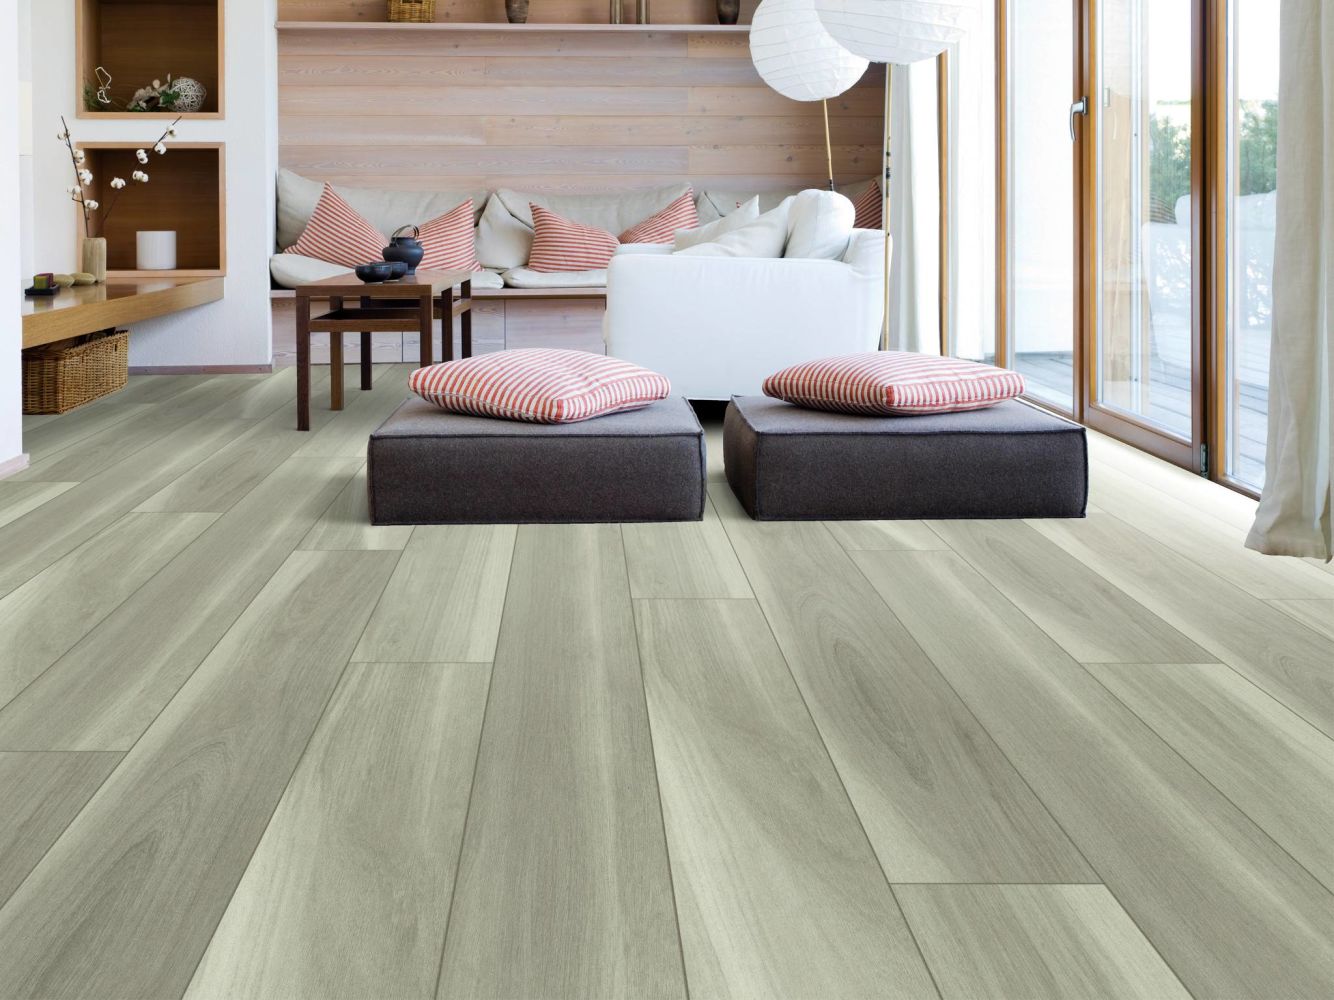 Shaw Floors Cp Colortile Rigid Core Plank And Tile Chancel Oak Clk Misty Oak 05008_CV171